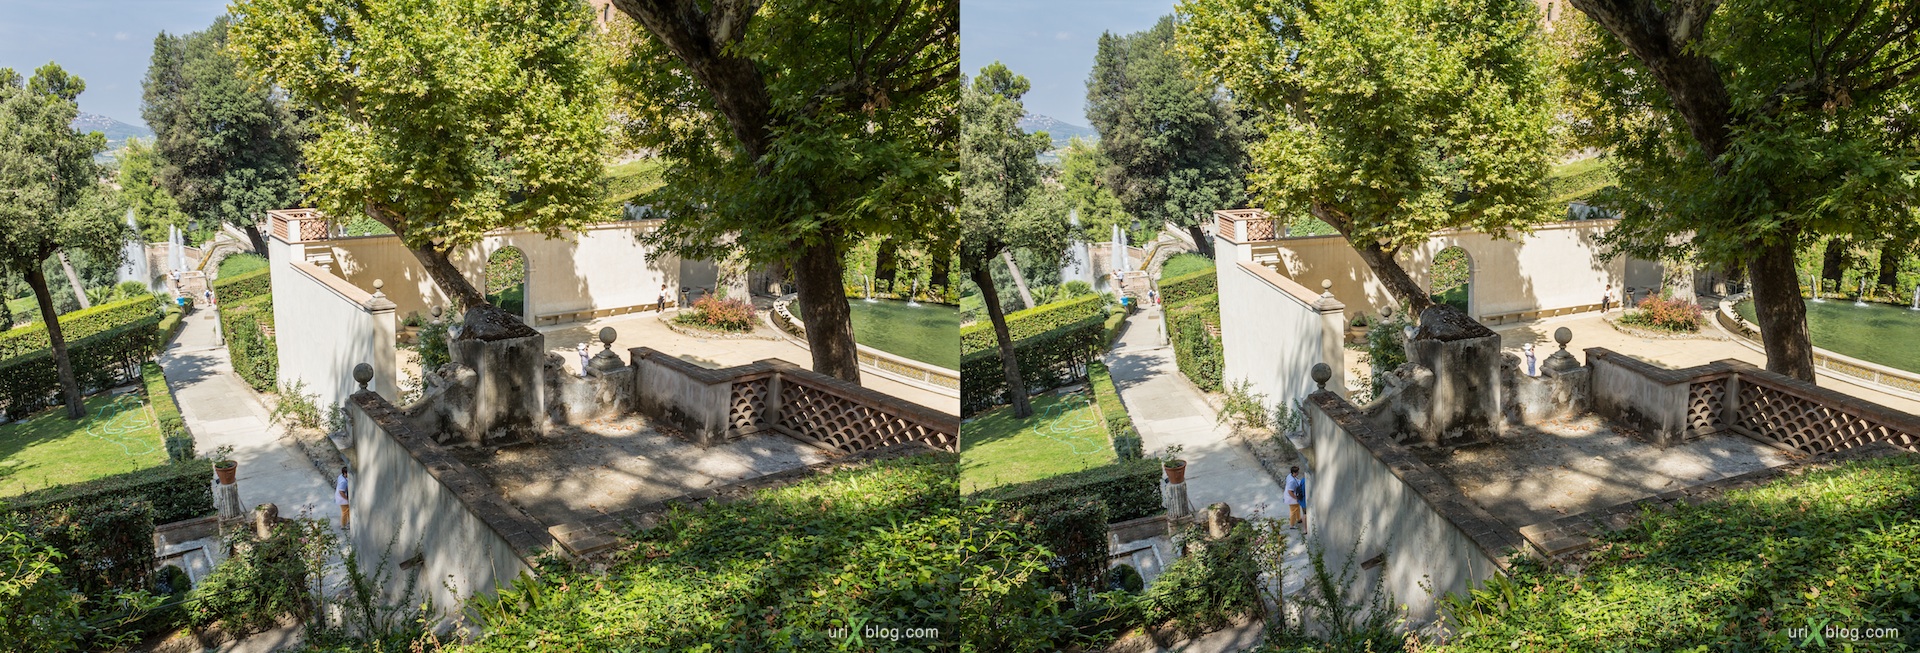 2012, Oval fountain, Fontana dell'Ovato, villa D'Este, Italy, Tivoli, Rome, 3D, stereo pair, cross-eyed, crossview, cross view stereo pair